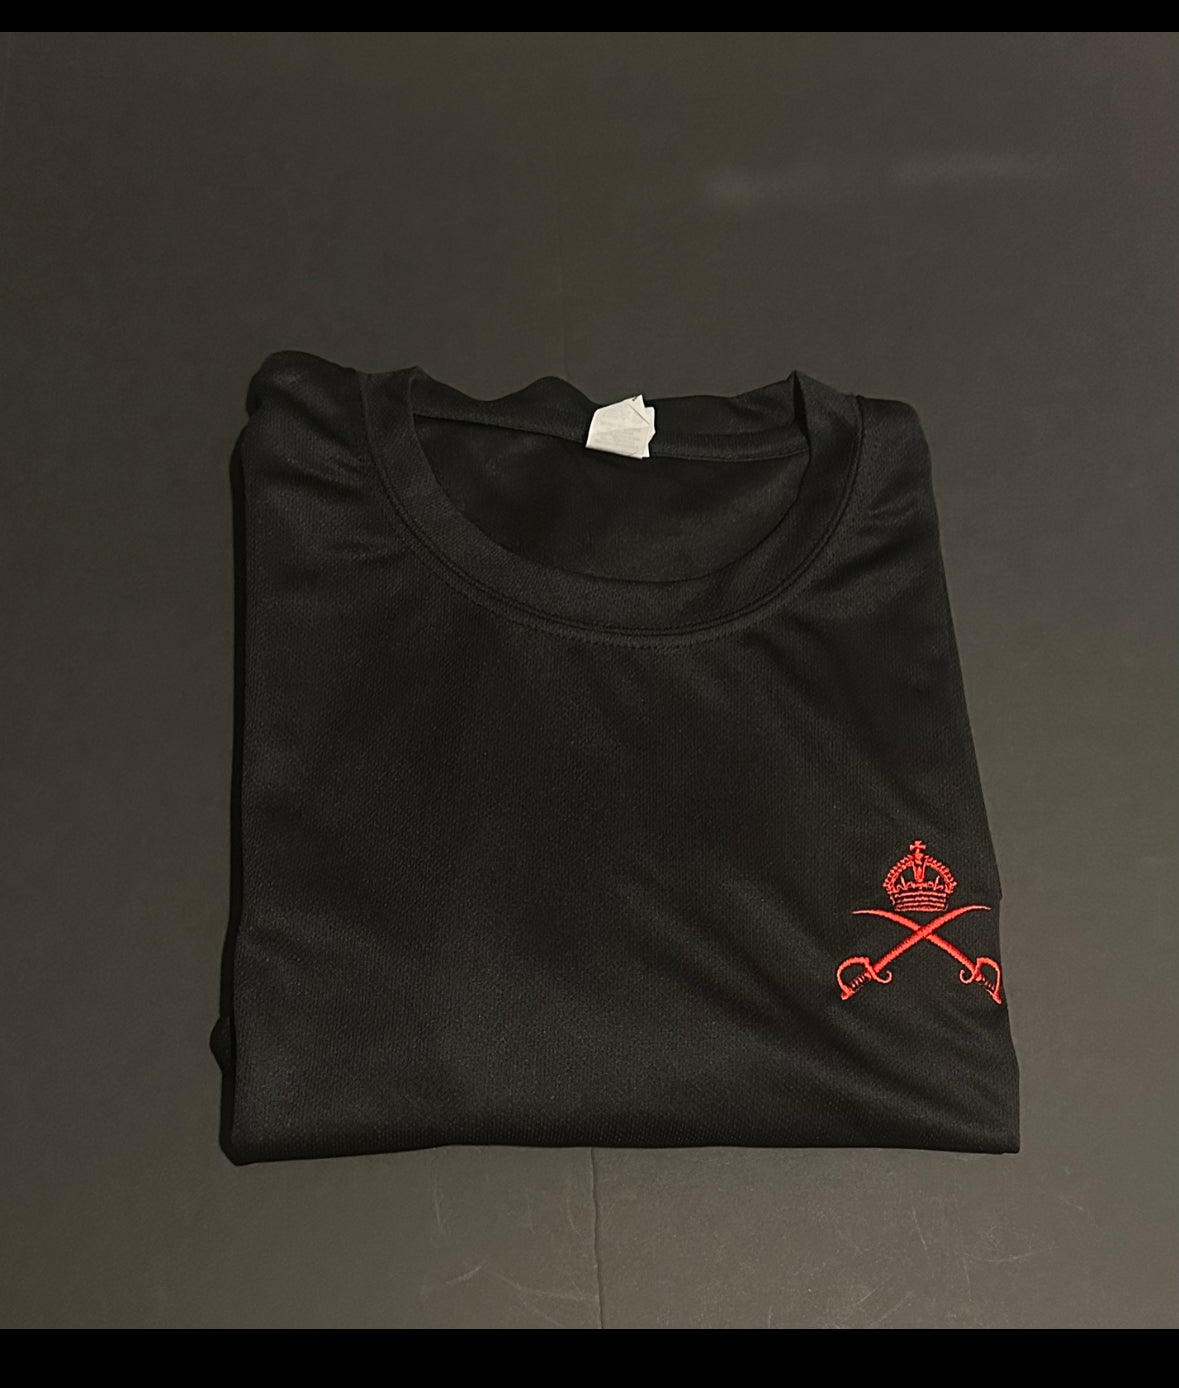 3 X Physical Training High Performance Dri-Fit T-Shirt  (Multi Deal) 1406